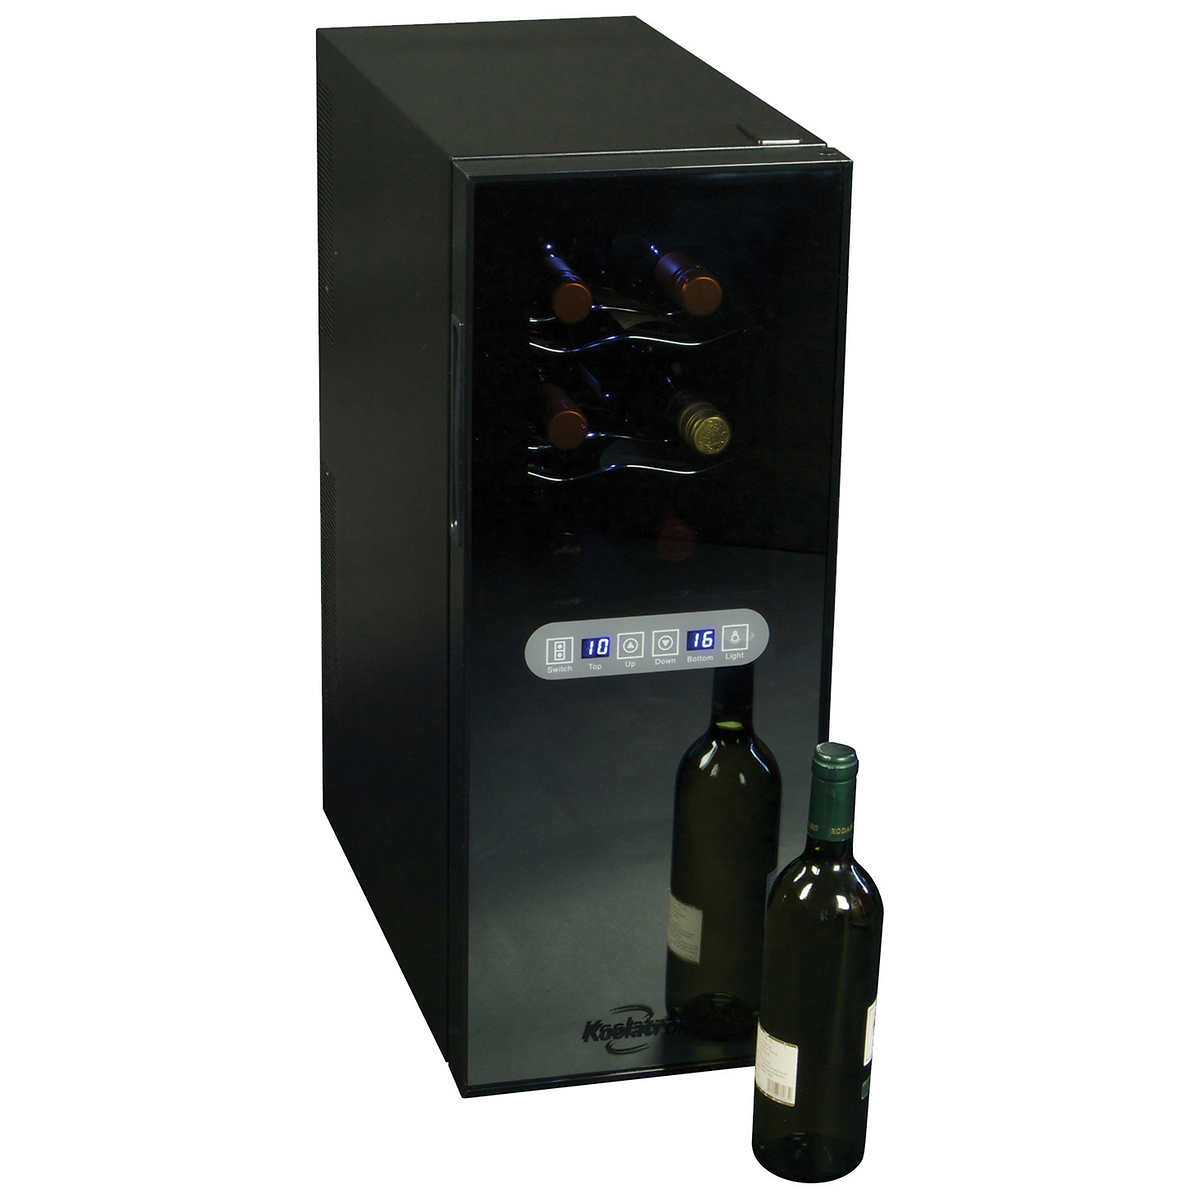 23+ Koolatron 10 bottle wine cooler manual information